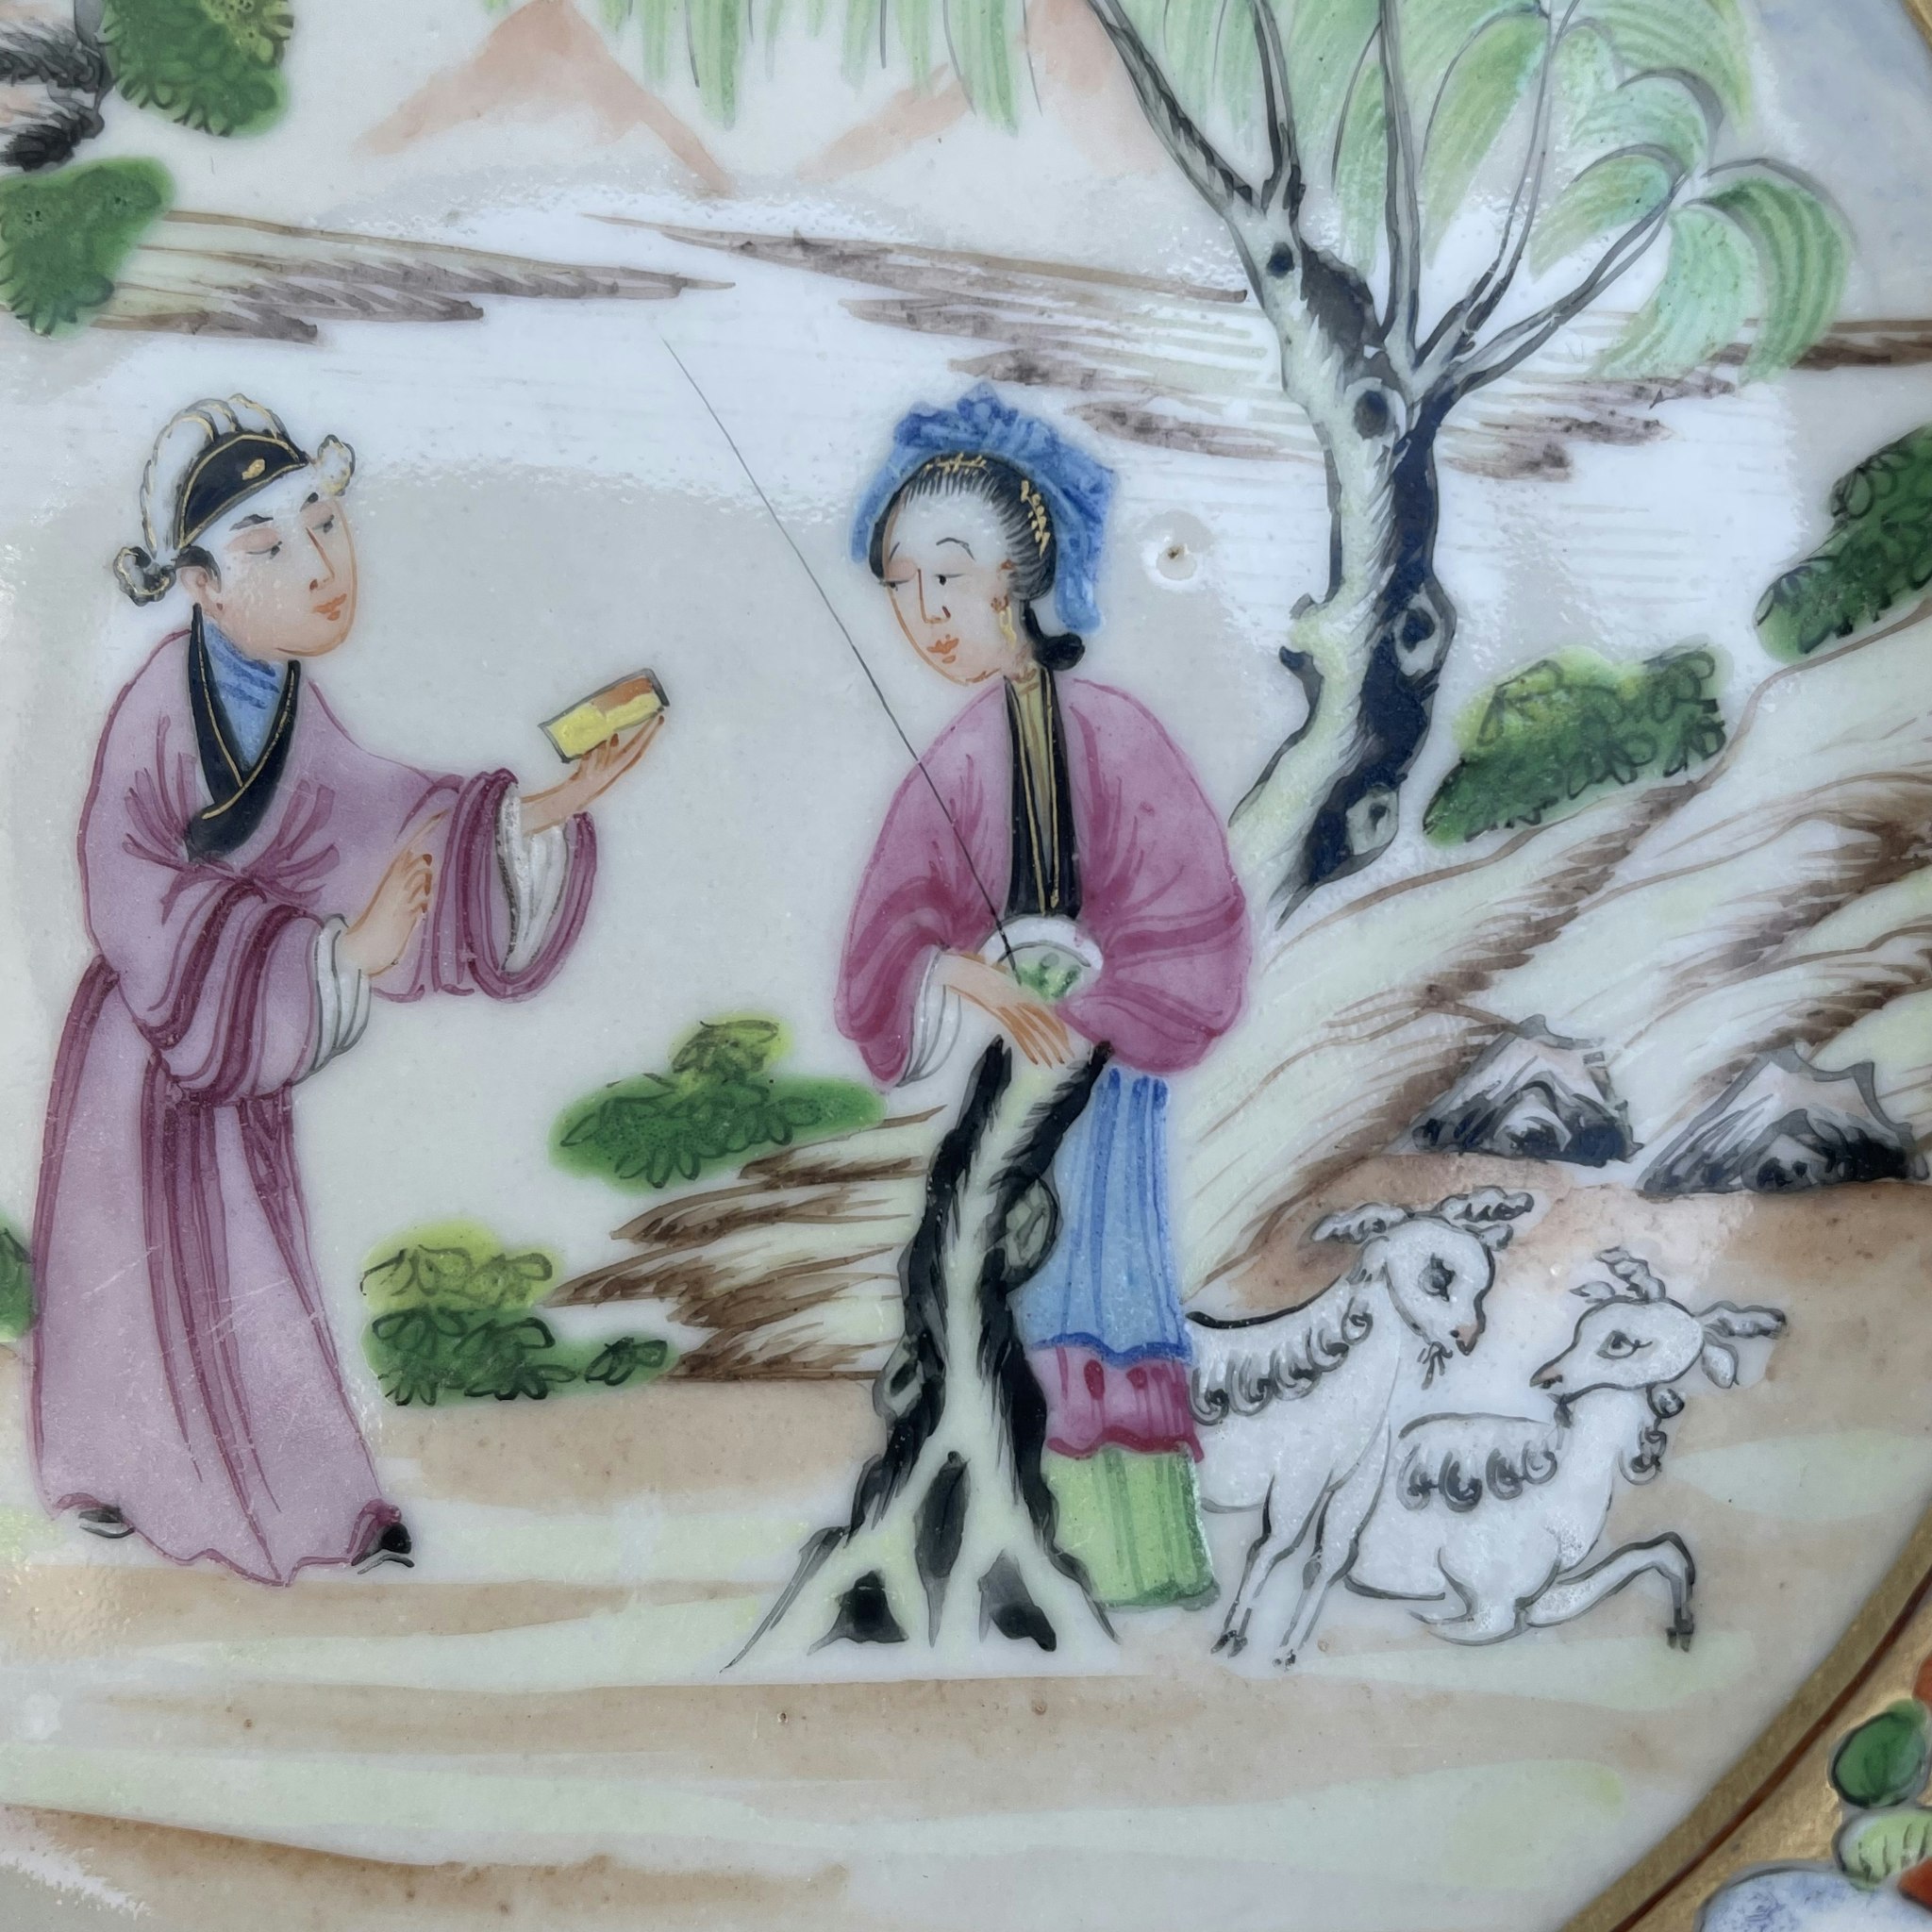 Three Antique Chinese rose mandarin dishes, Jiaqing / Daoguang #1475, 1476, 1477